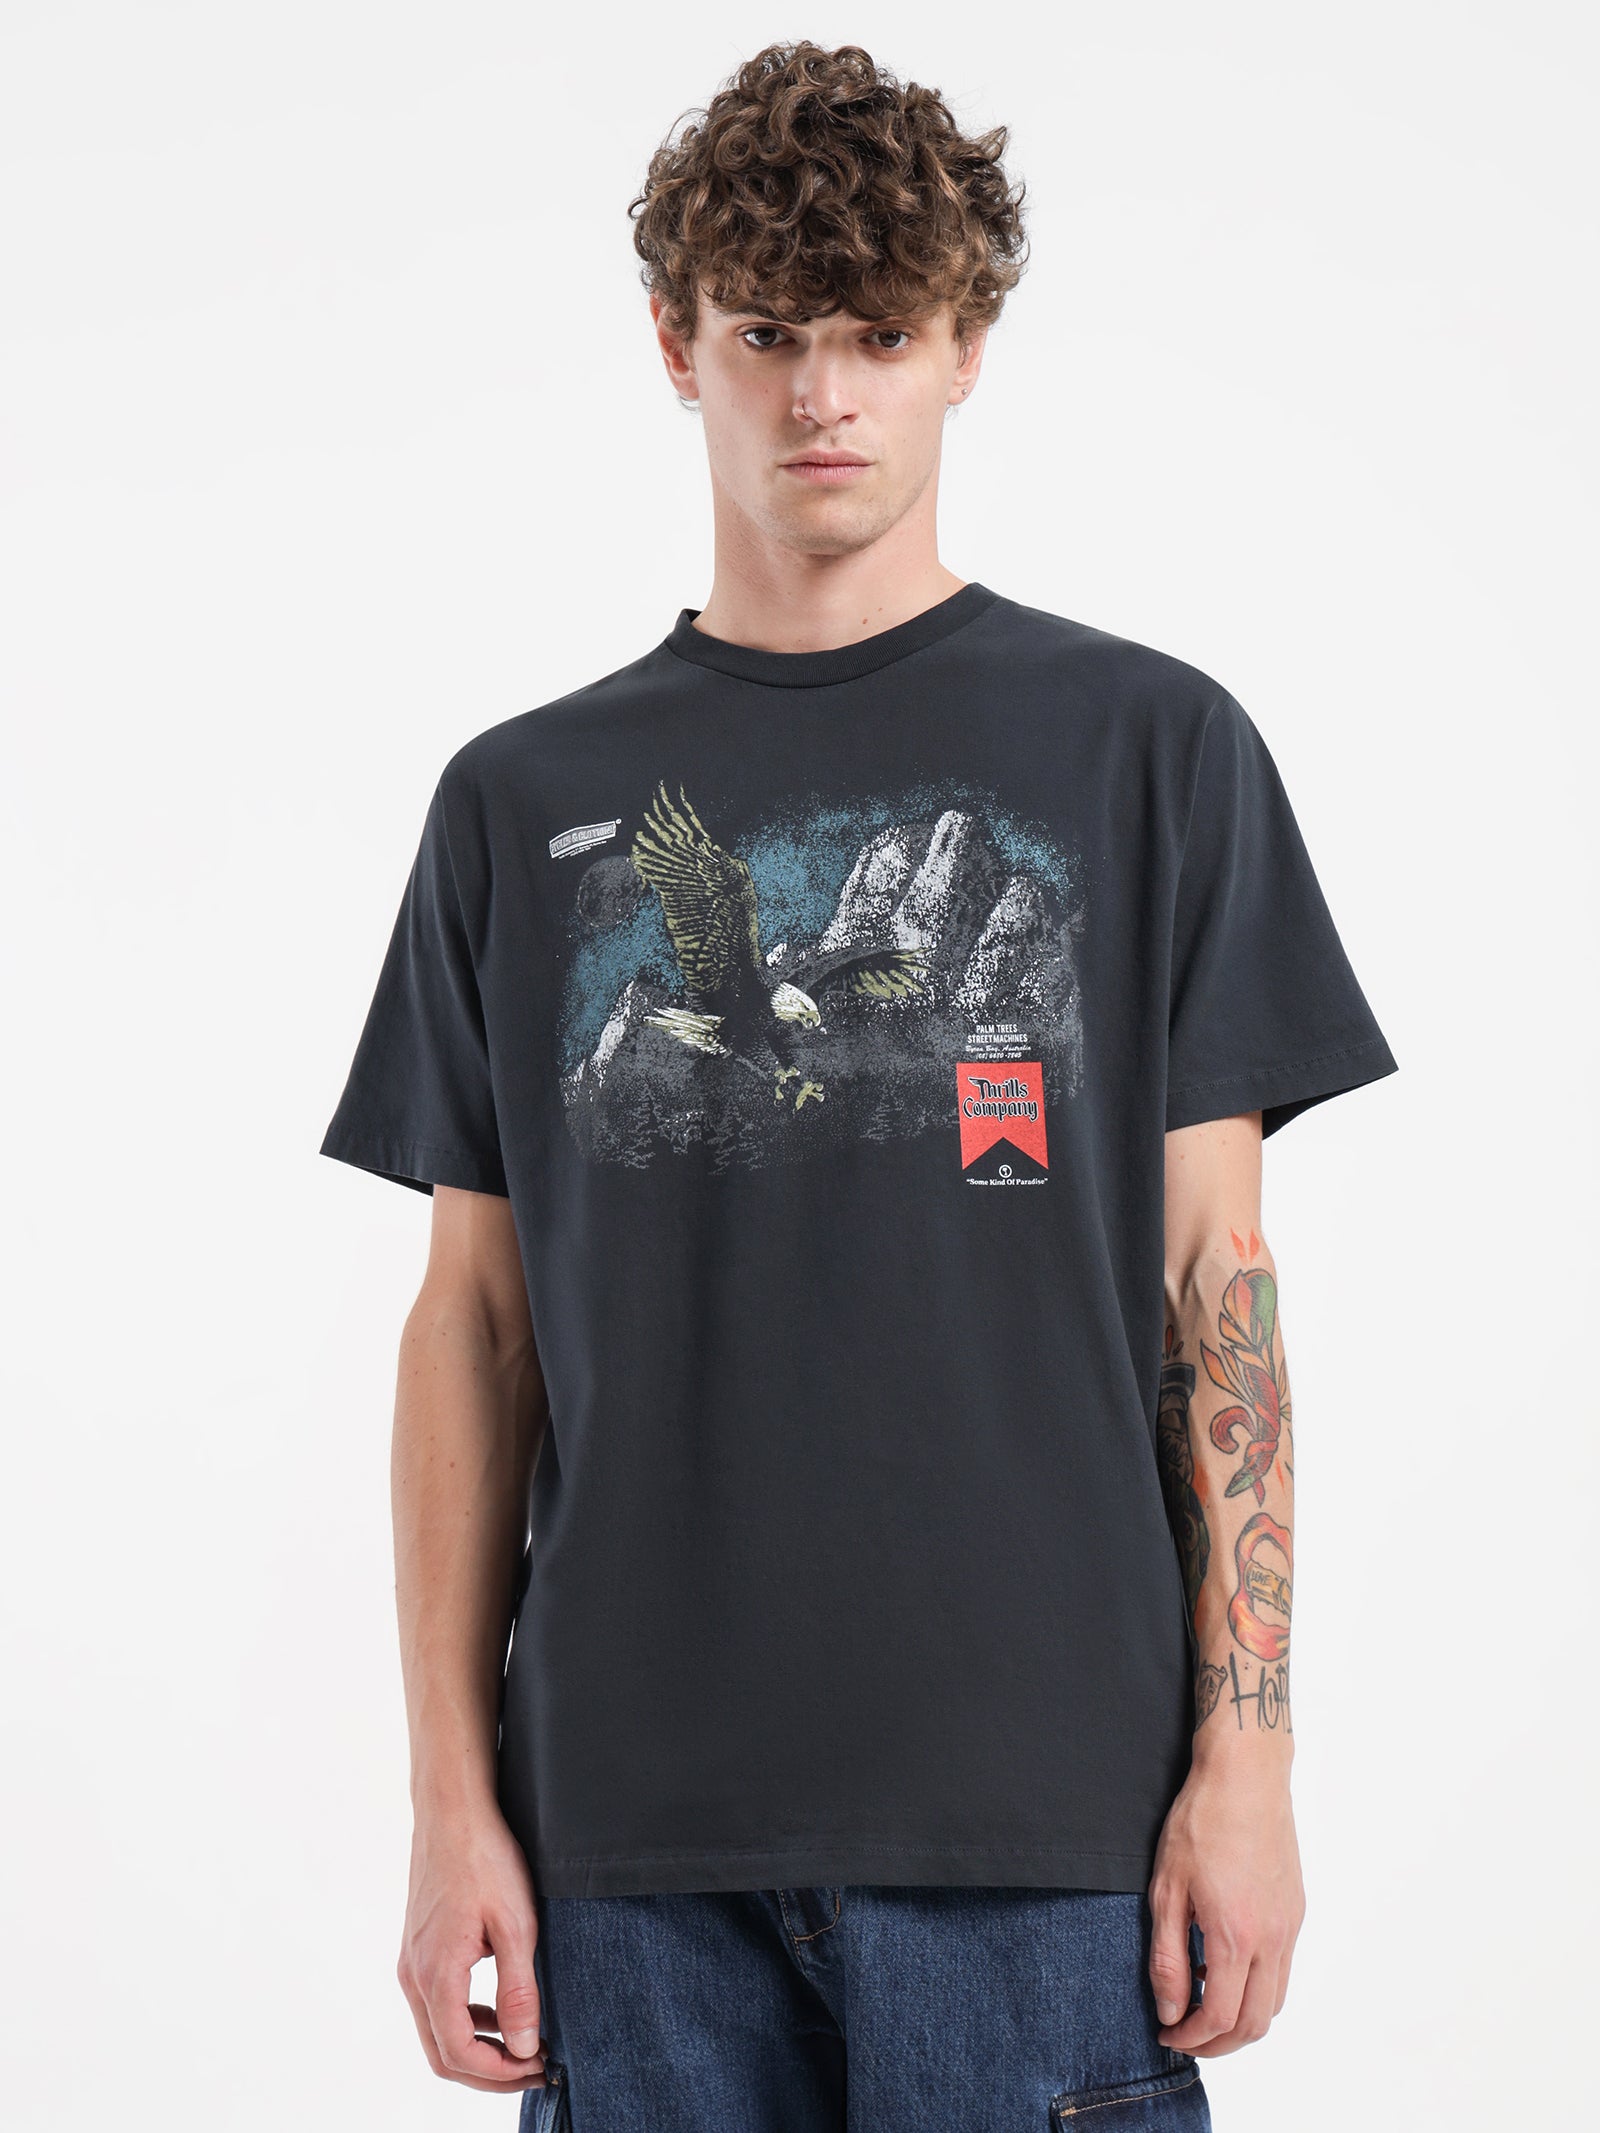 Survival Merch Fit T-Shirt in Black - Glue Store